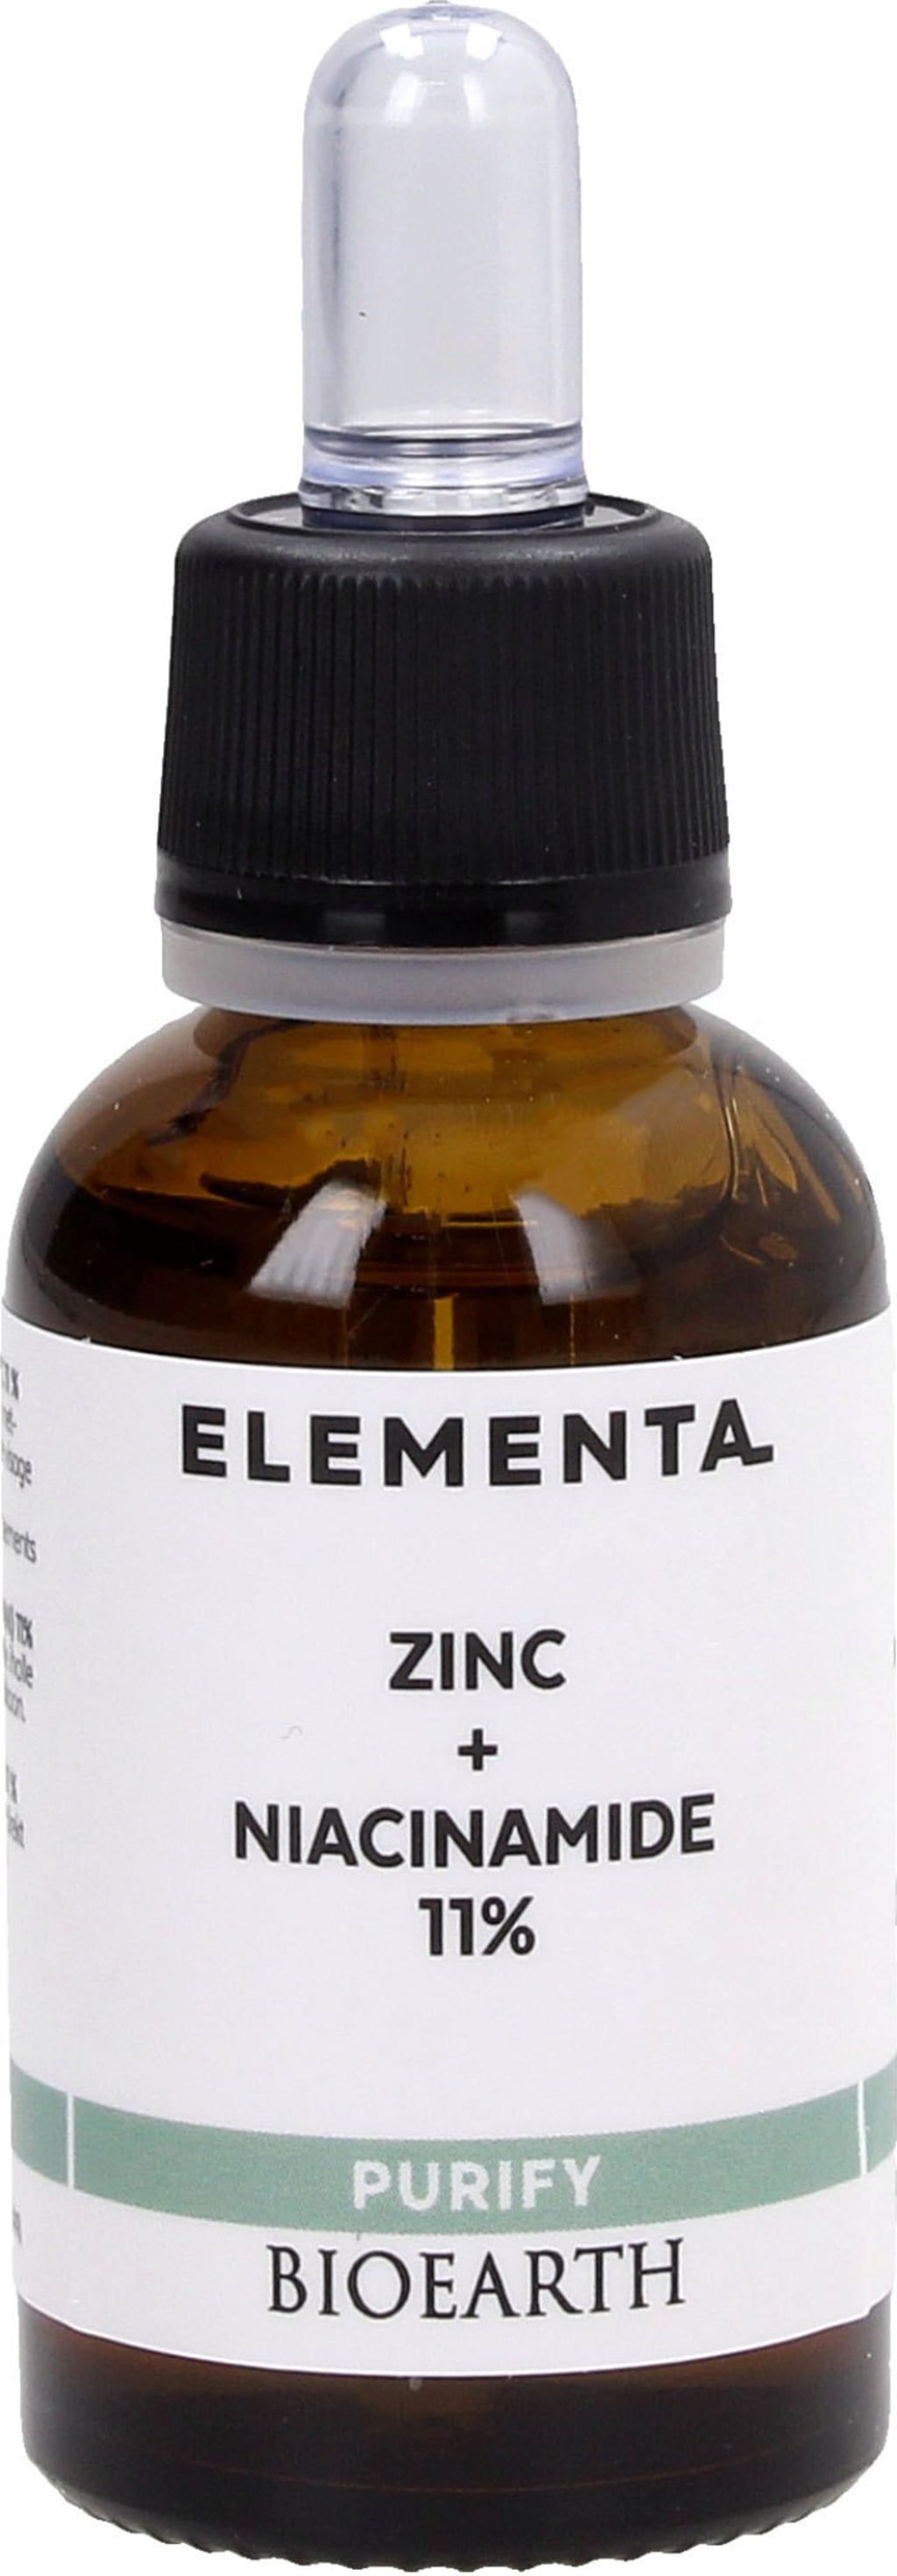 Bioearth ELEMENTA PURIFY Zinc + Niacinamide 11% - 30 ml